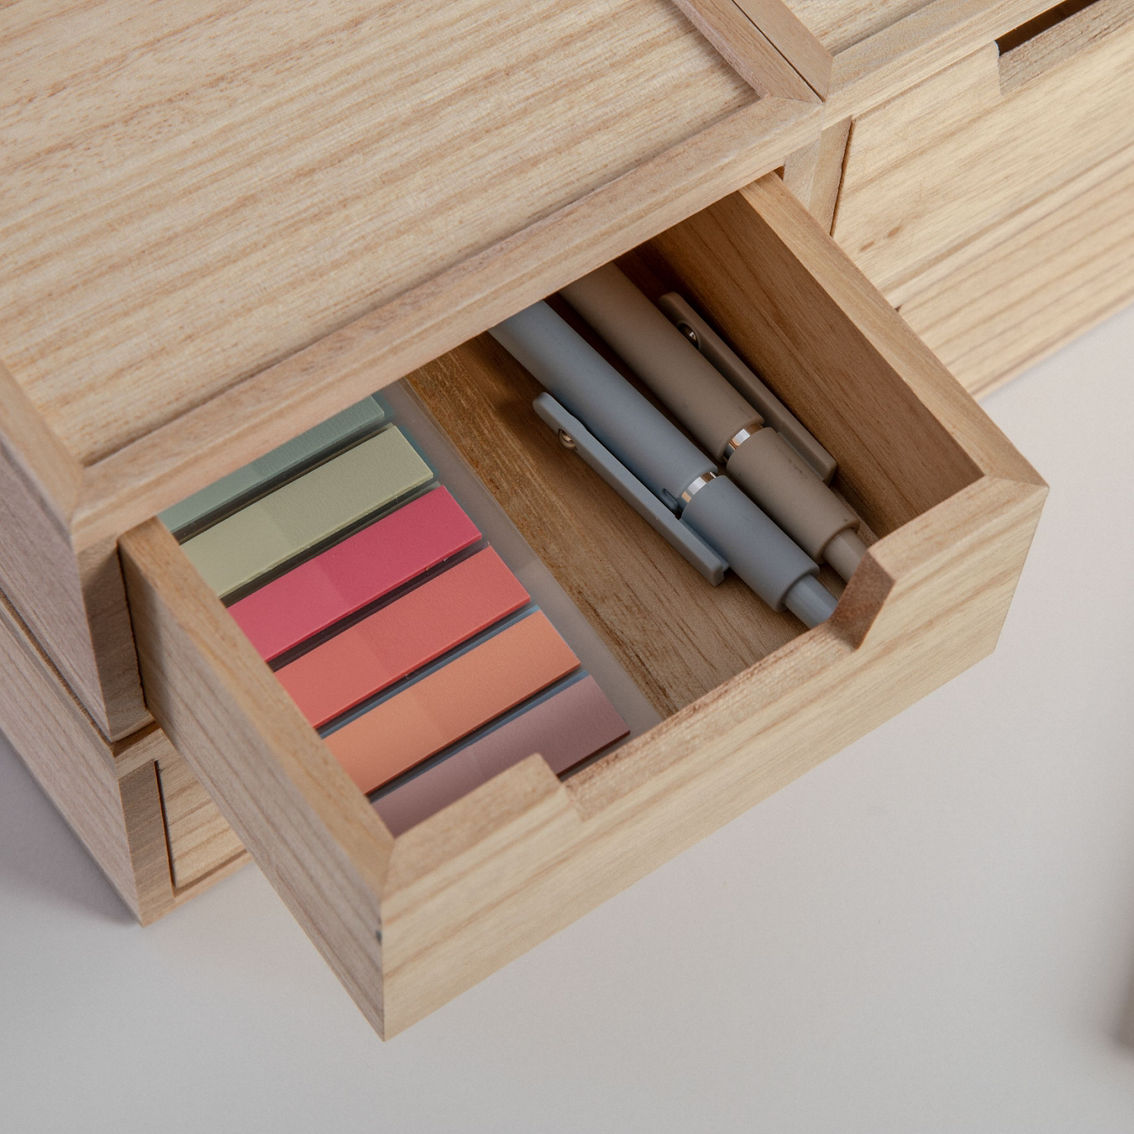 Martha Stewart 3PK Wooden Storage Box with Drawers - Image 5 of 5